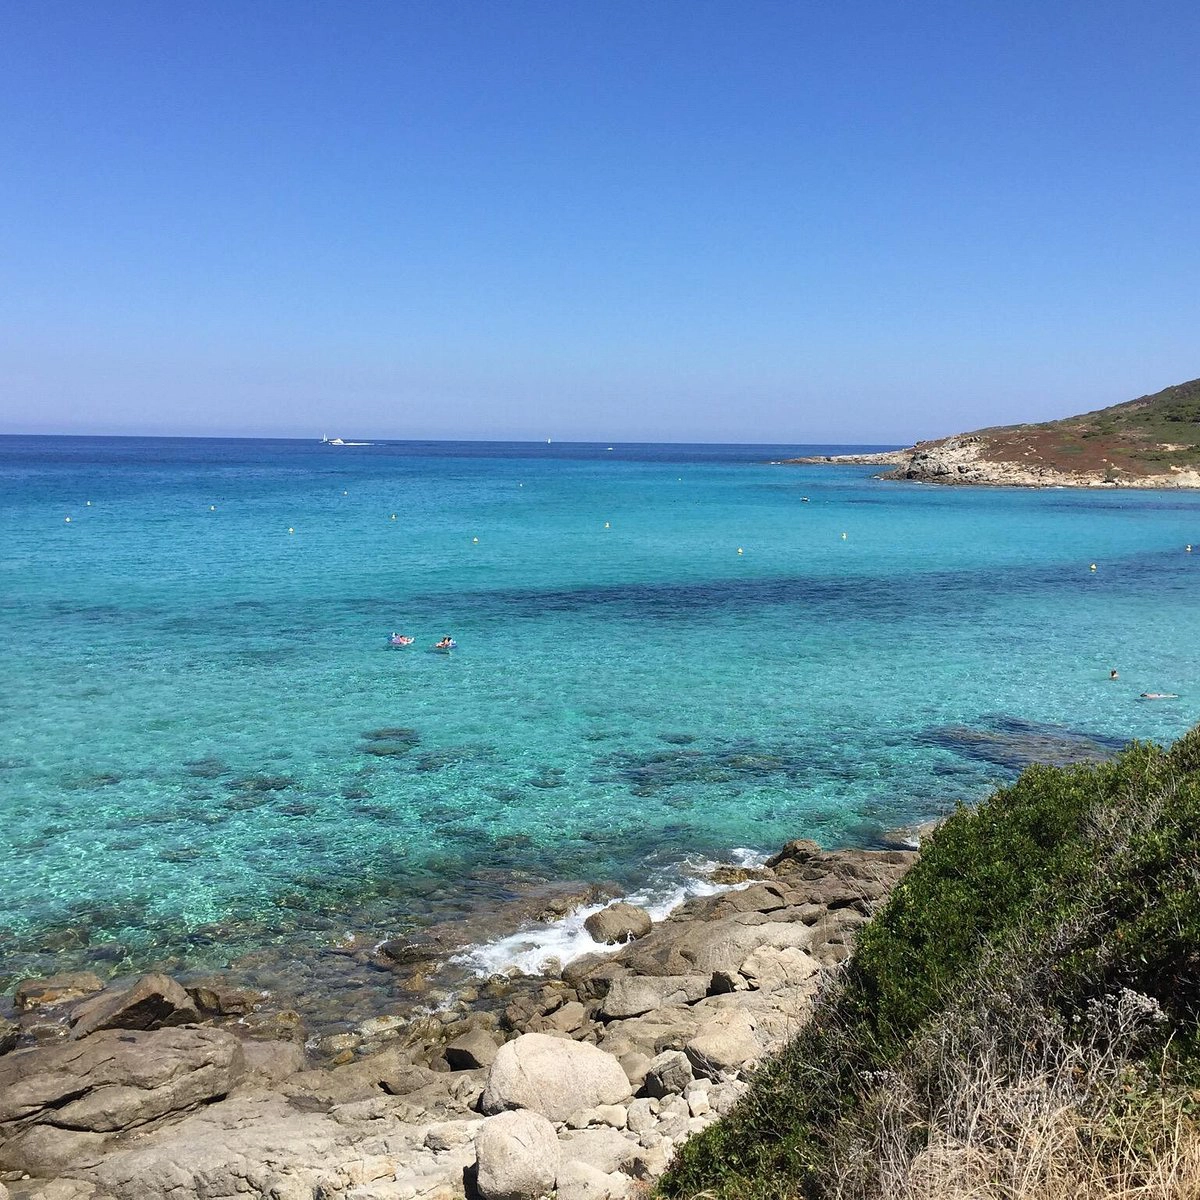  Bodri  strand - Corsica